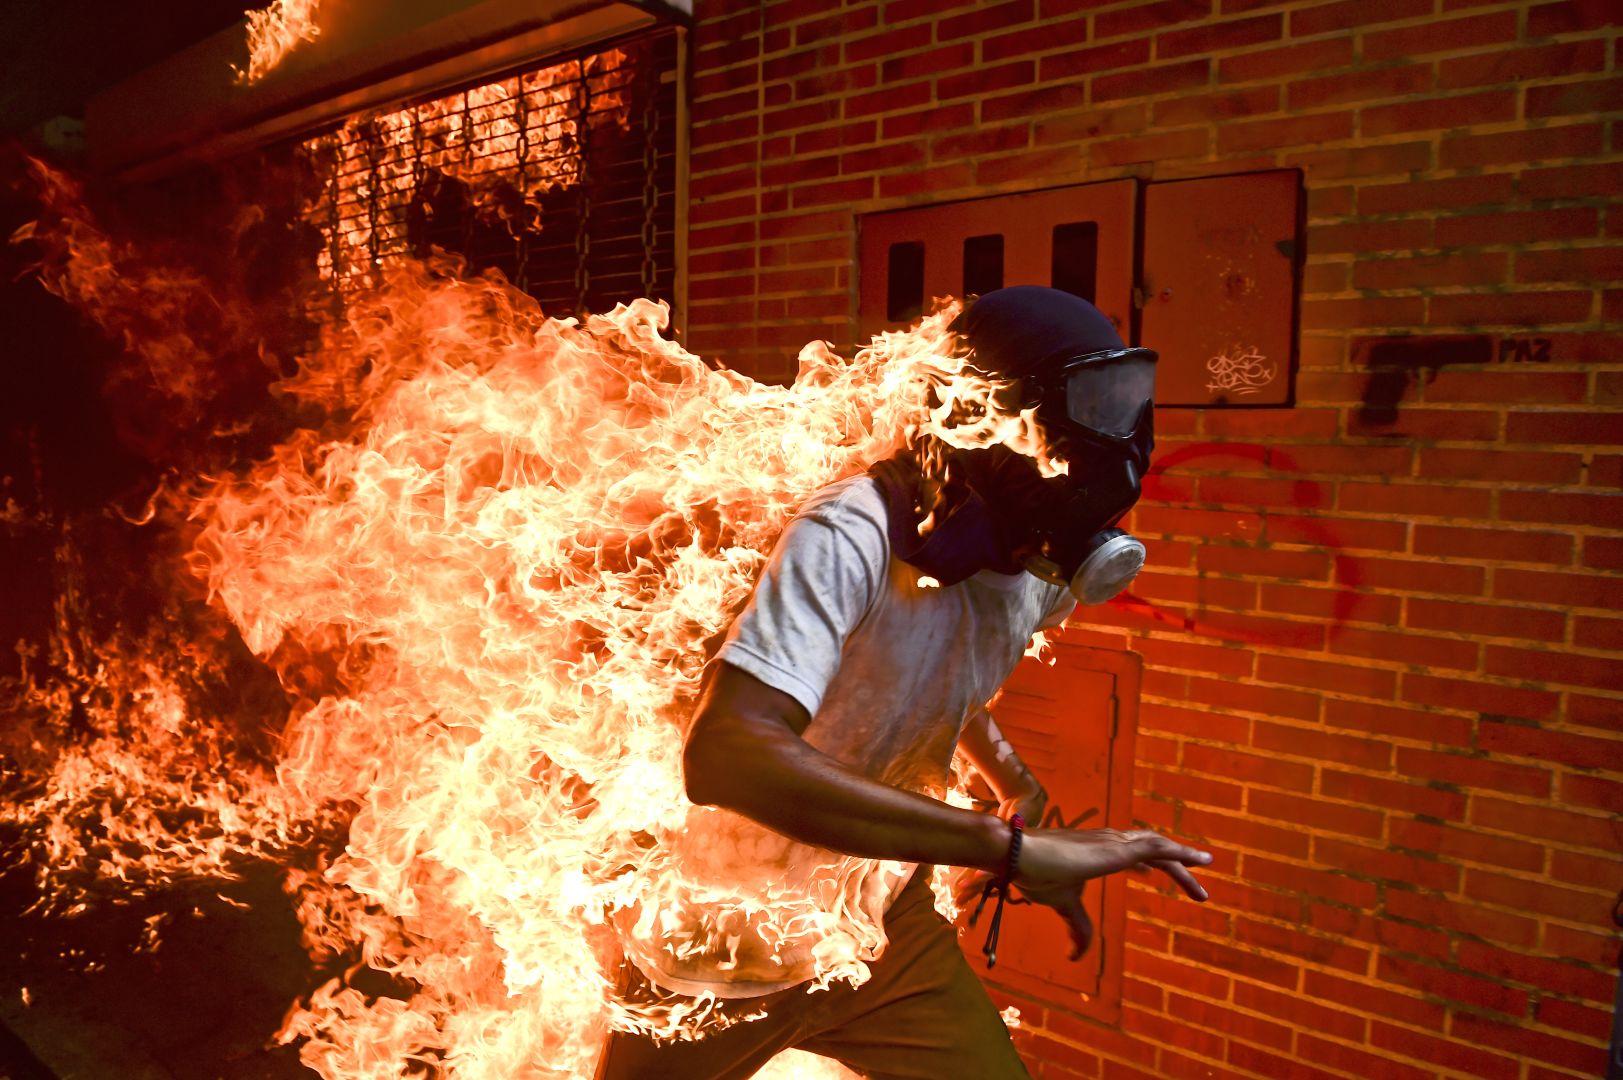 Venezuela Crisis by Ronaldo Schemidt. World Press Photo of the Year.